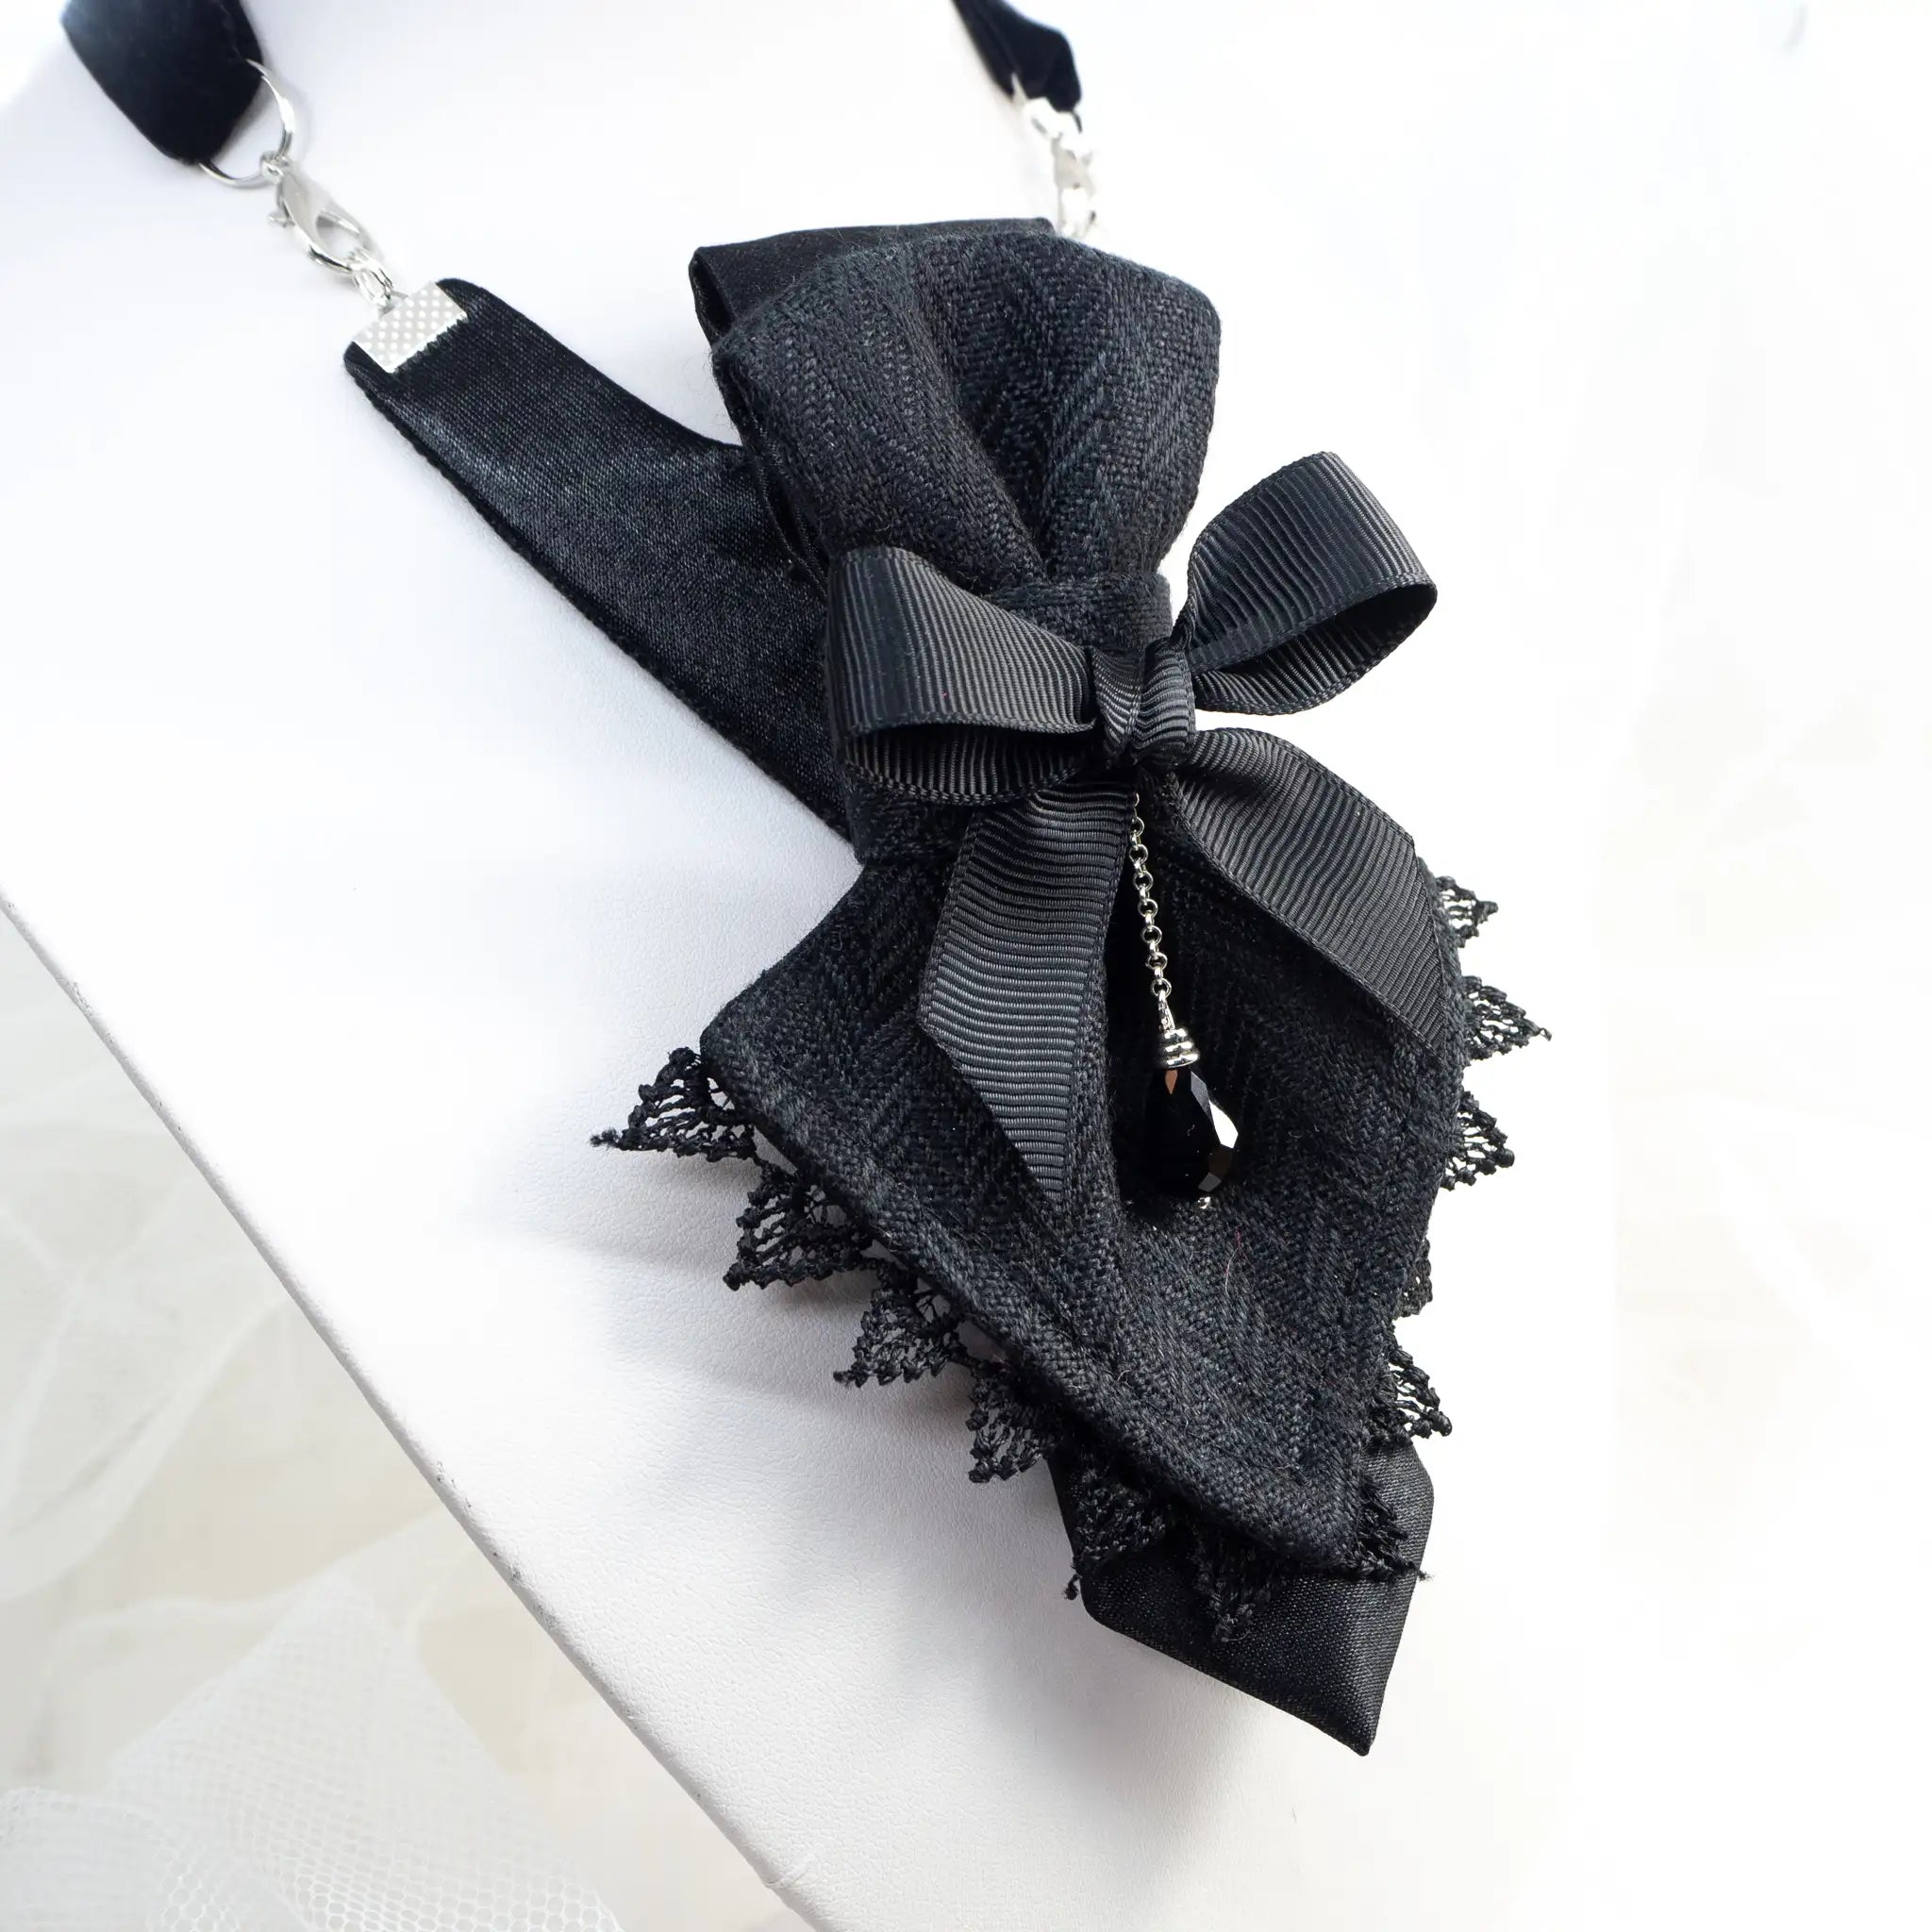 Ladies' Black Necktie, Black tie fow stylish women, Necktie for ger, Gift black tie for elegant women